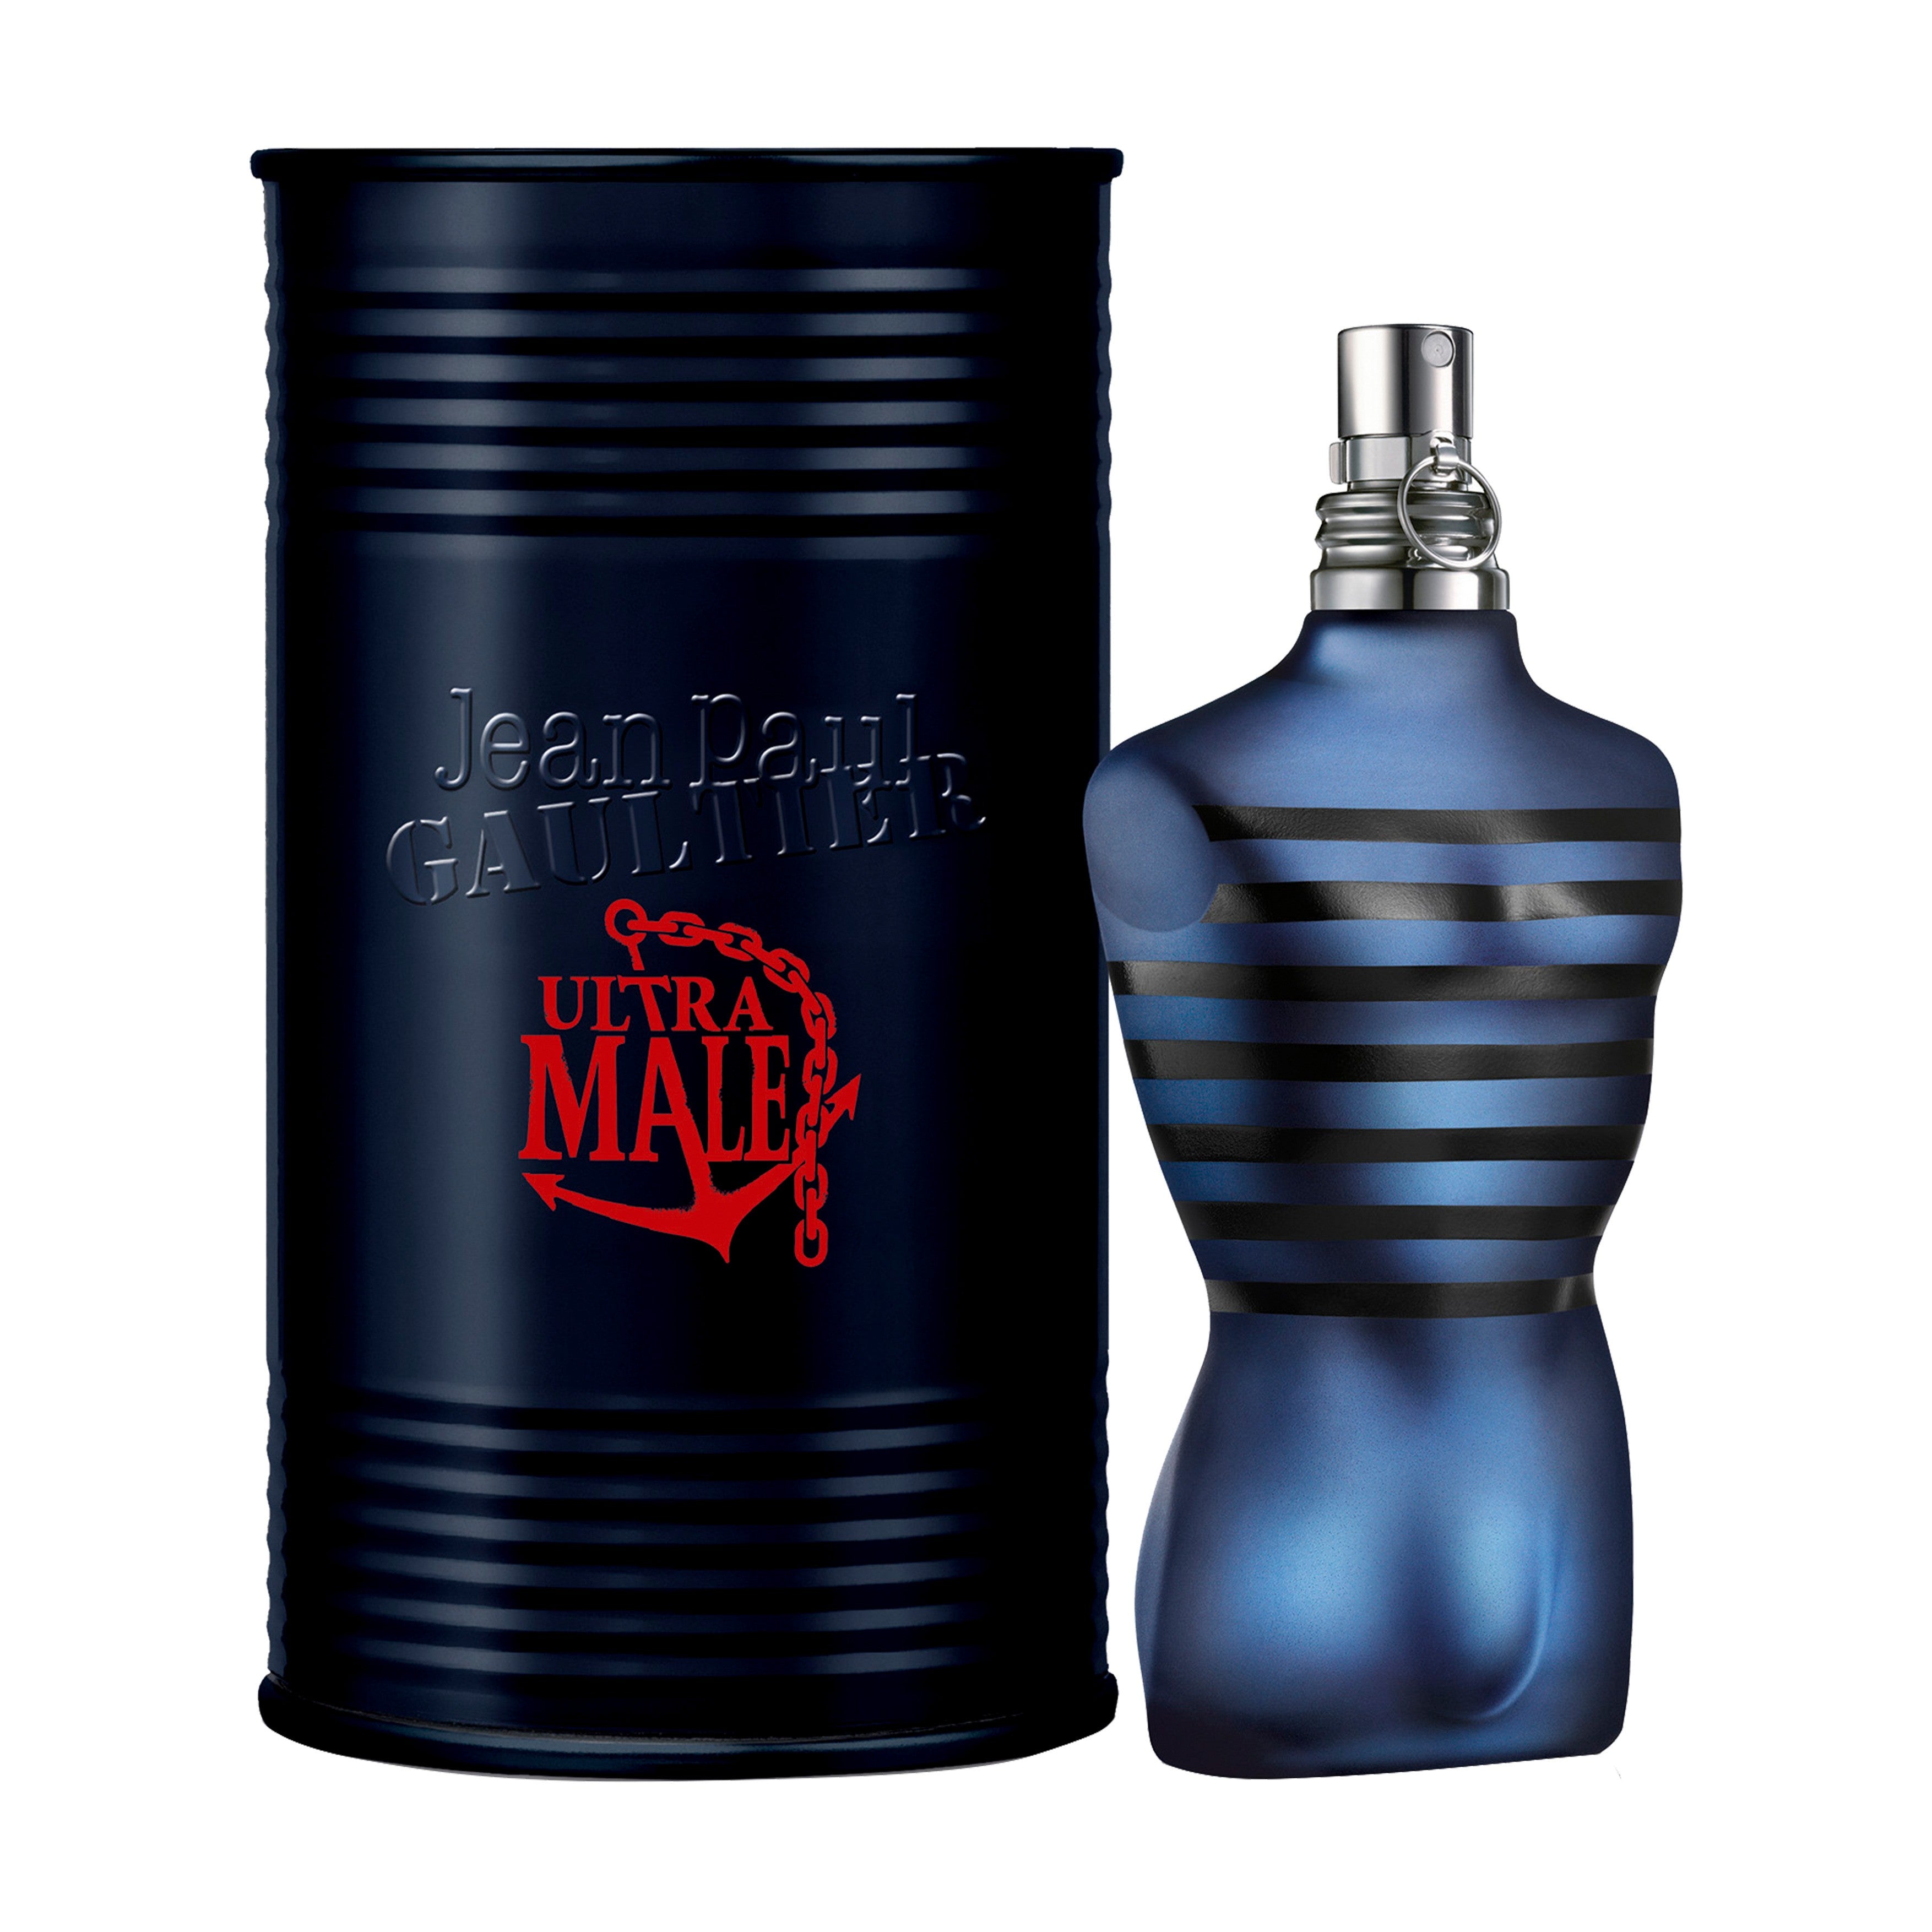 COSMETICOS-perfume-jean-paul-ultra-male-cab-75ml